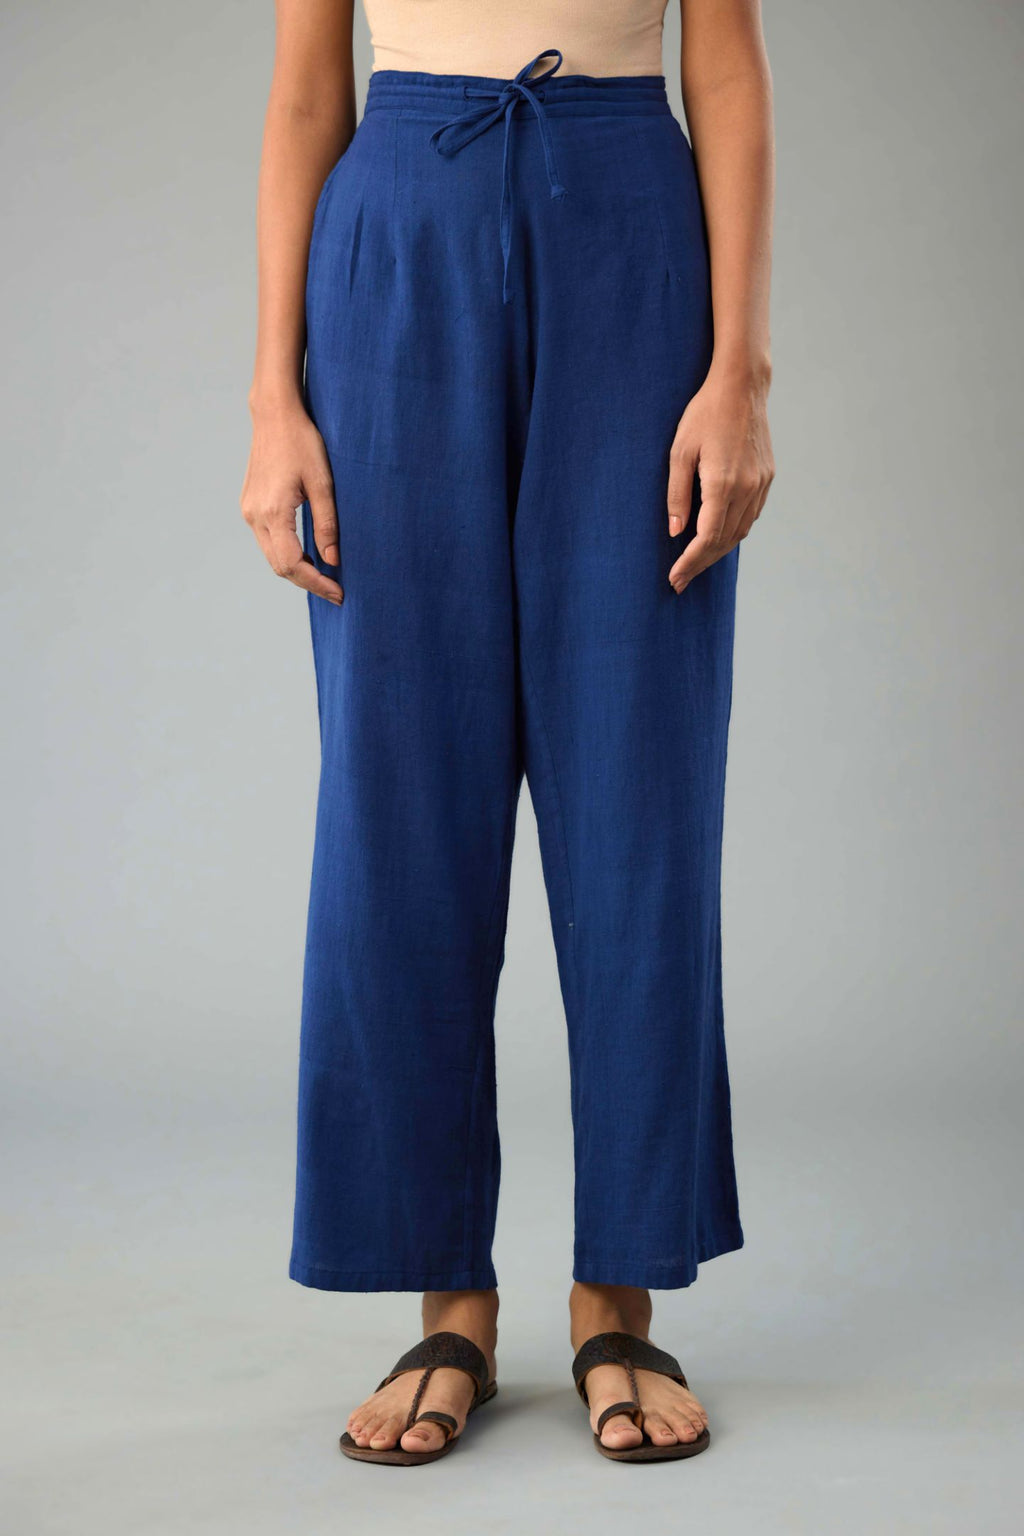 Blue handloom cotton straight pants.